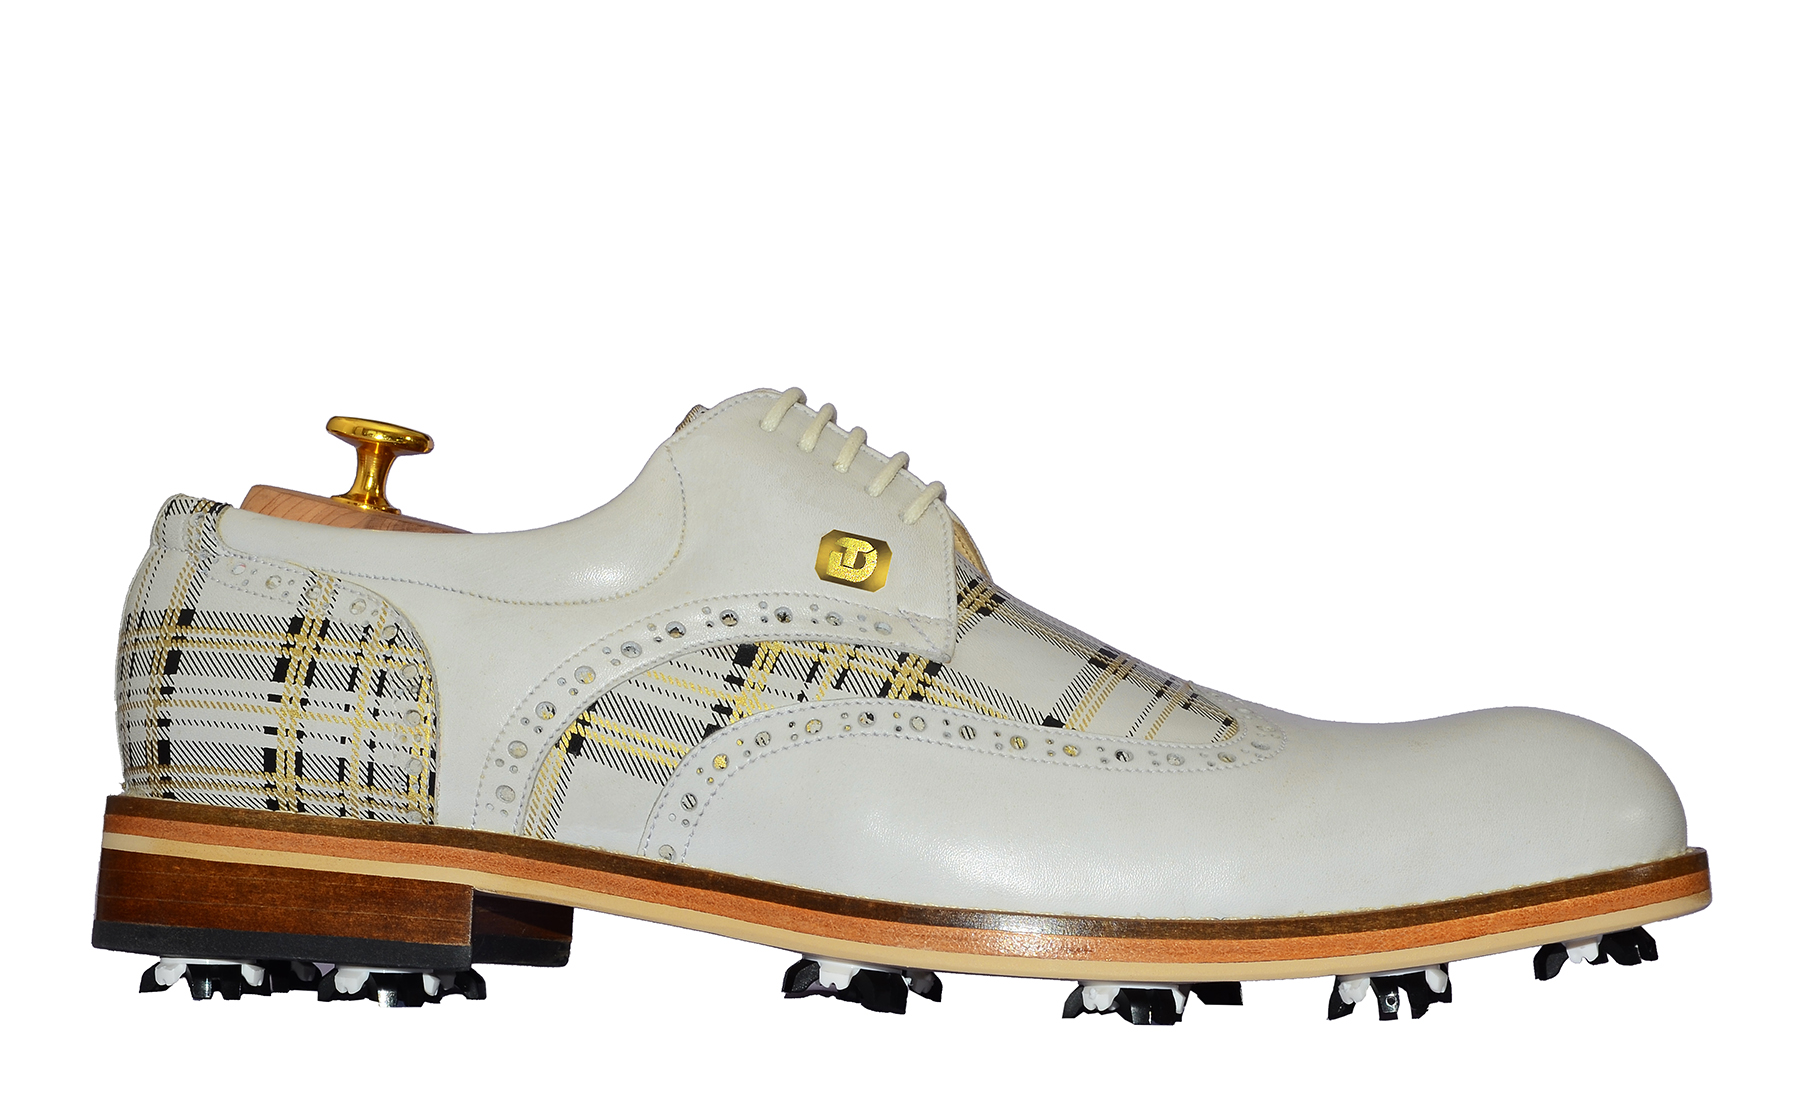 Classic Golf Shoes